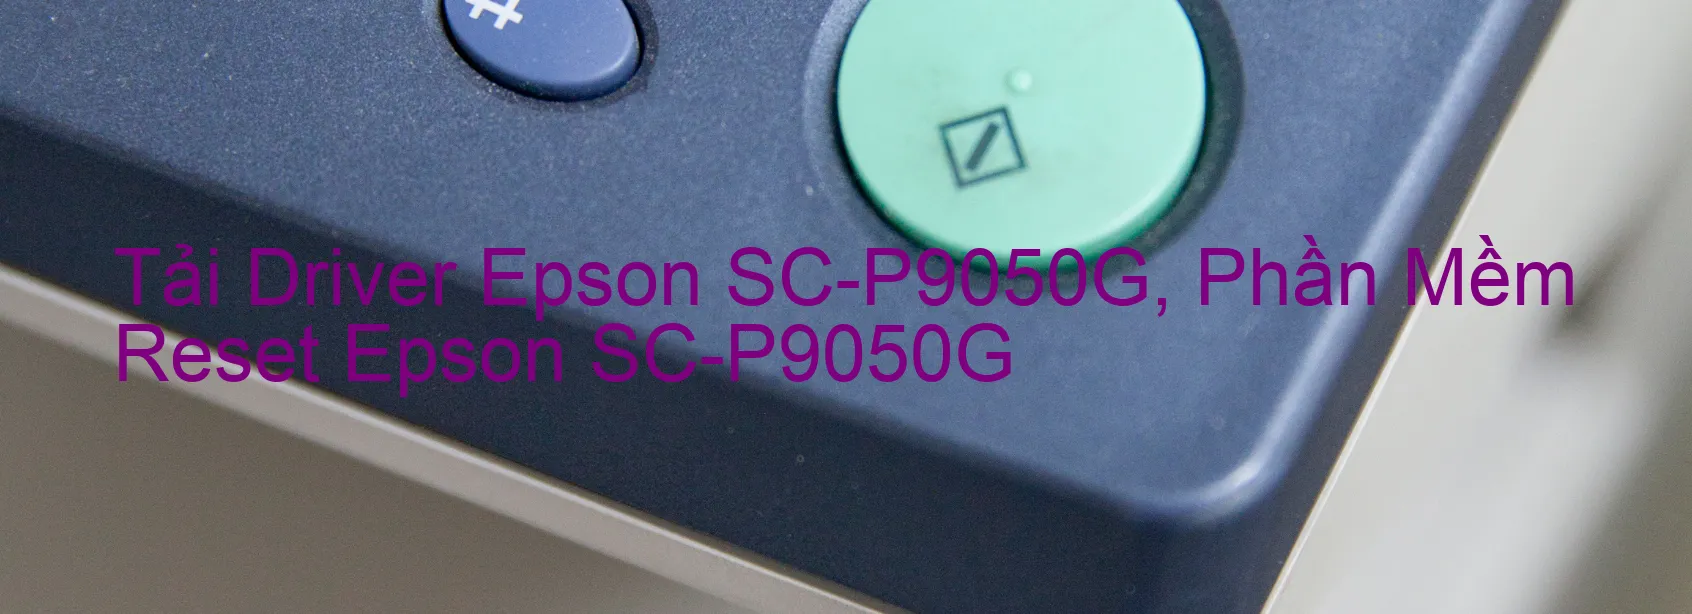 Driver Epson SC-P9050G, Phần Mềm Reset Epson SC-P9050G